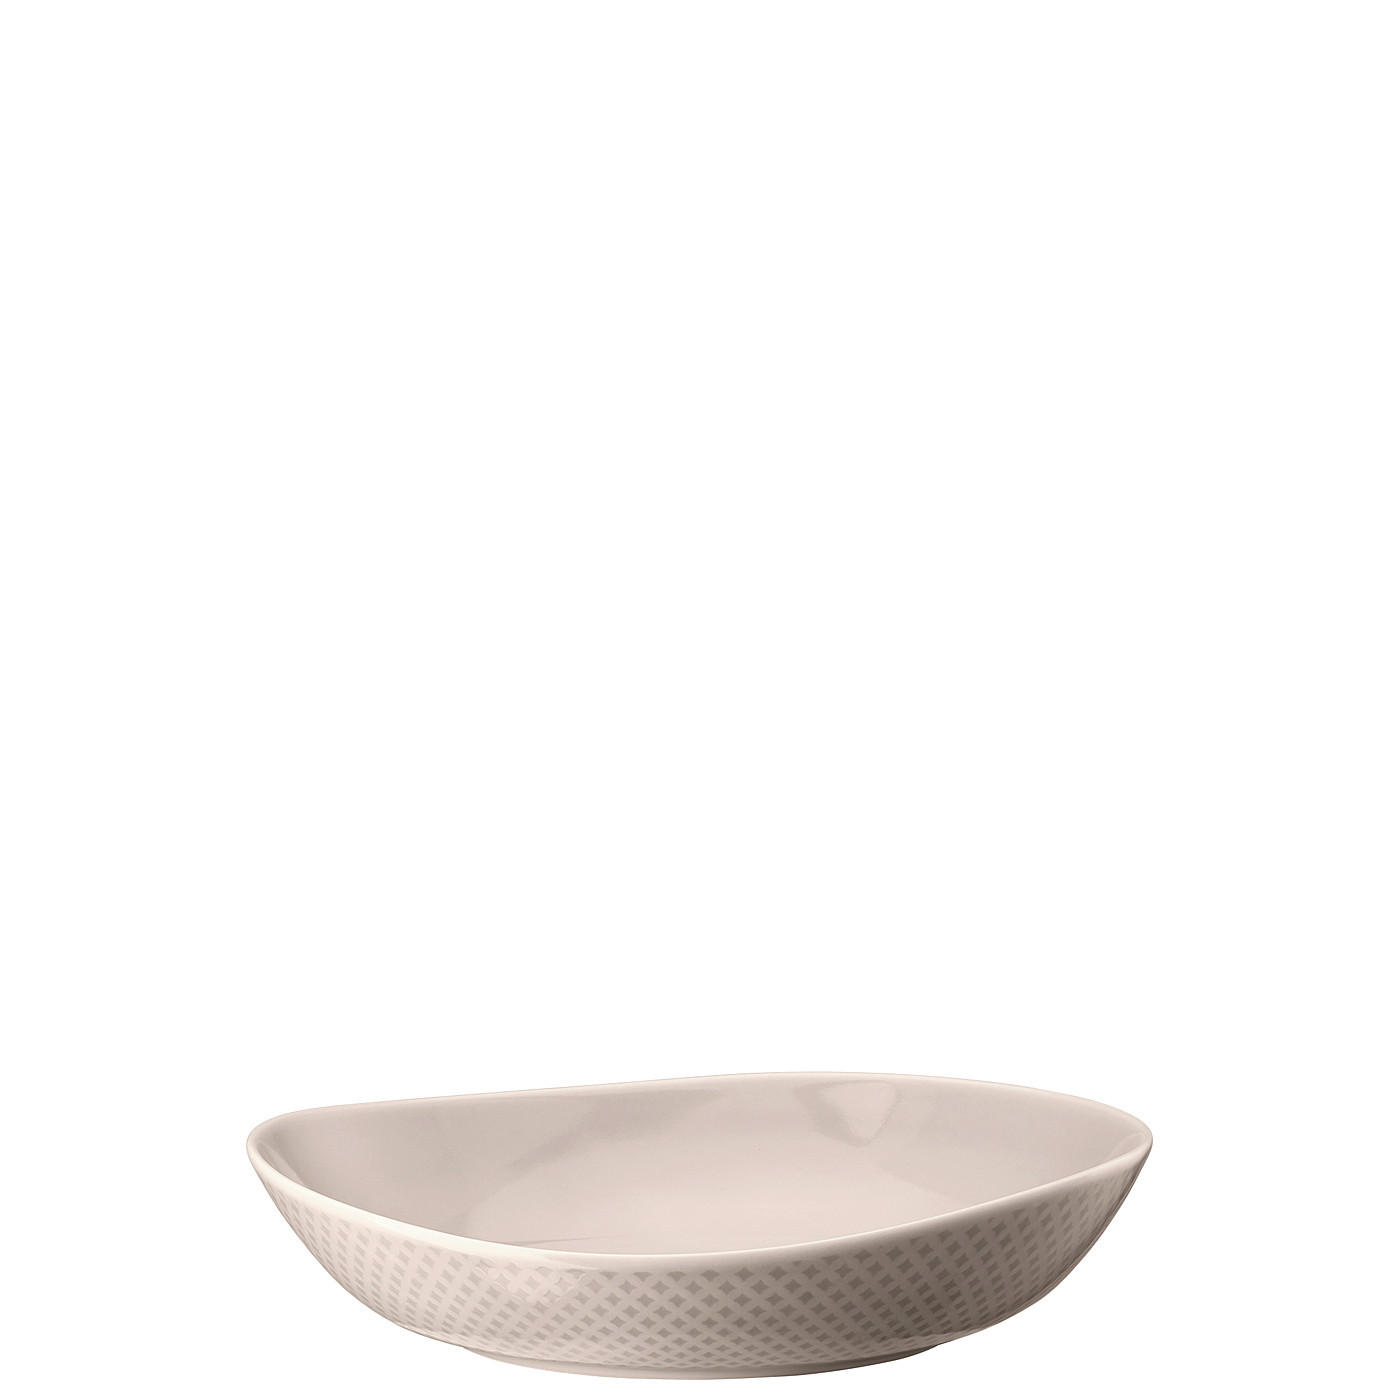 SUPPENTELLER Junto Soft Shell Porzellan  - Grau, LIFESTYLE, Keramik (21,5/21/5cm) - Rosenthal